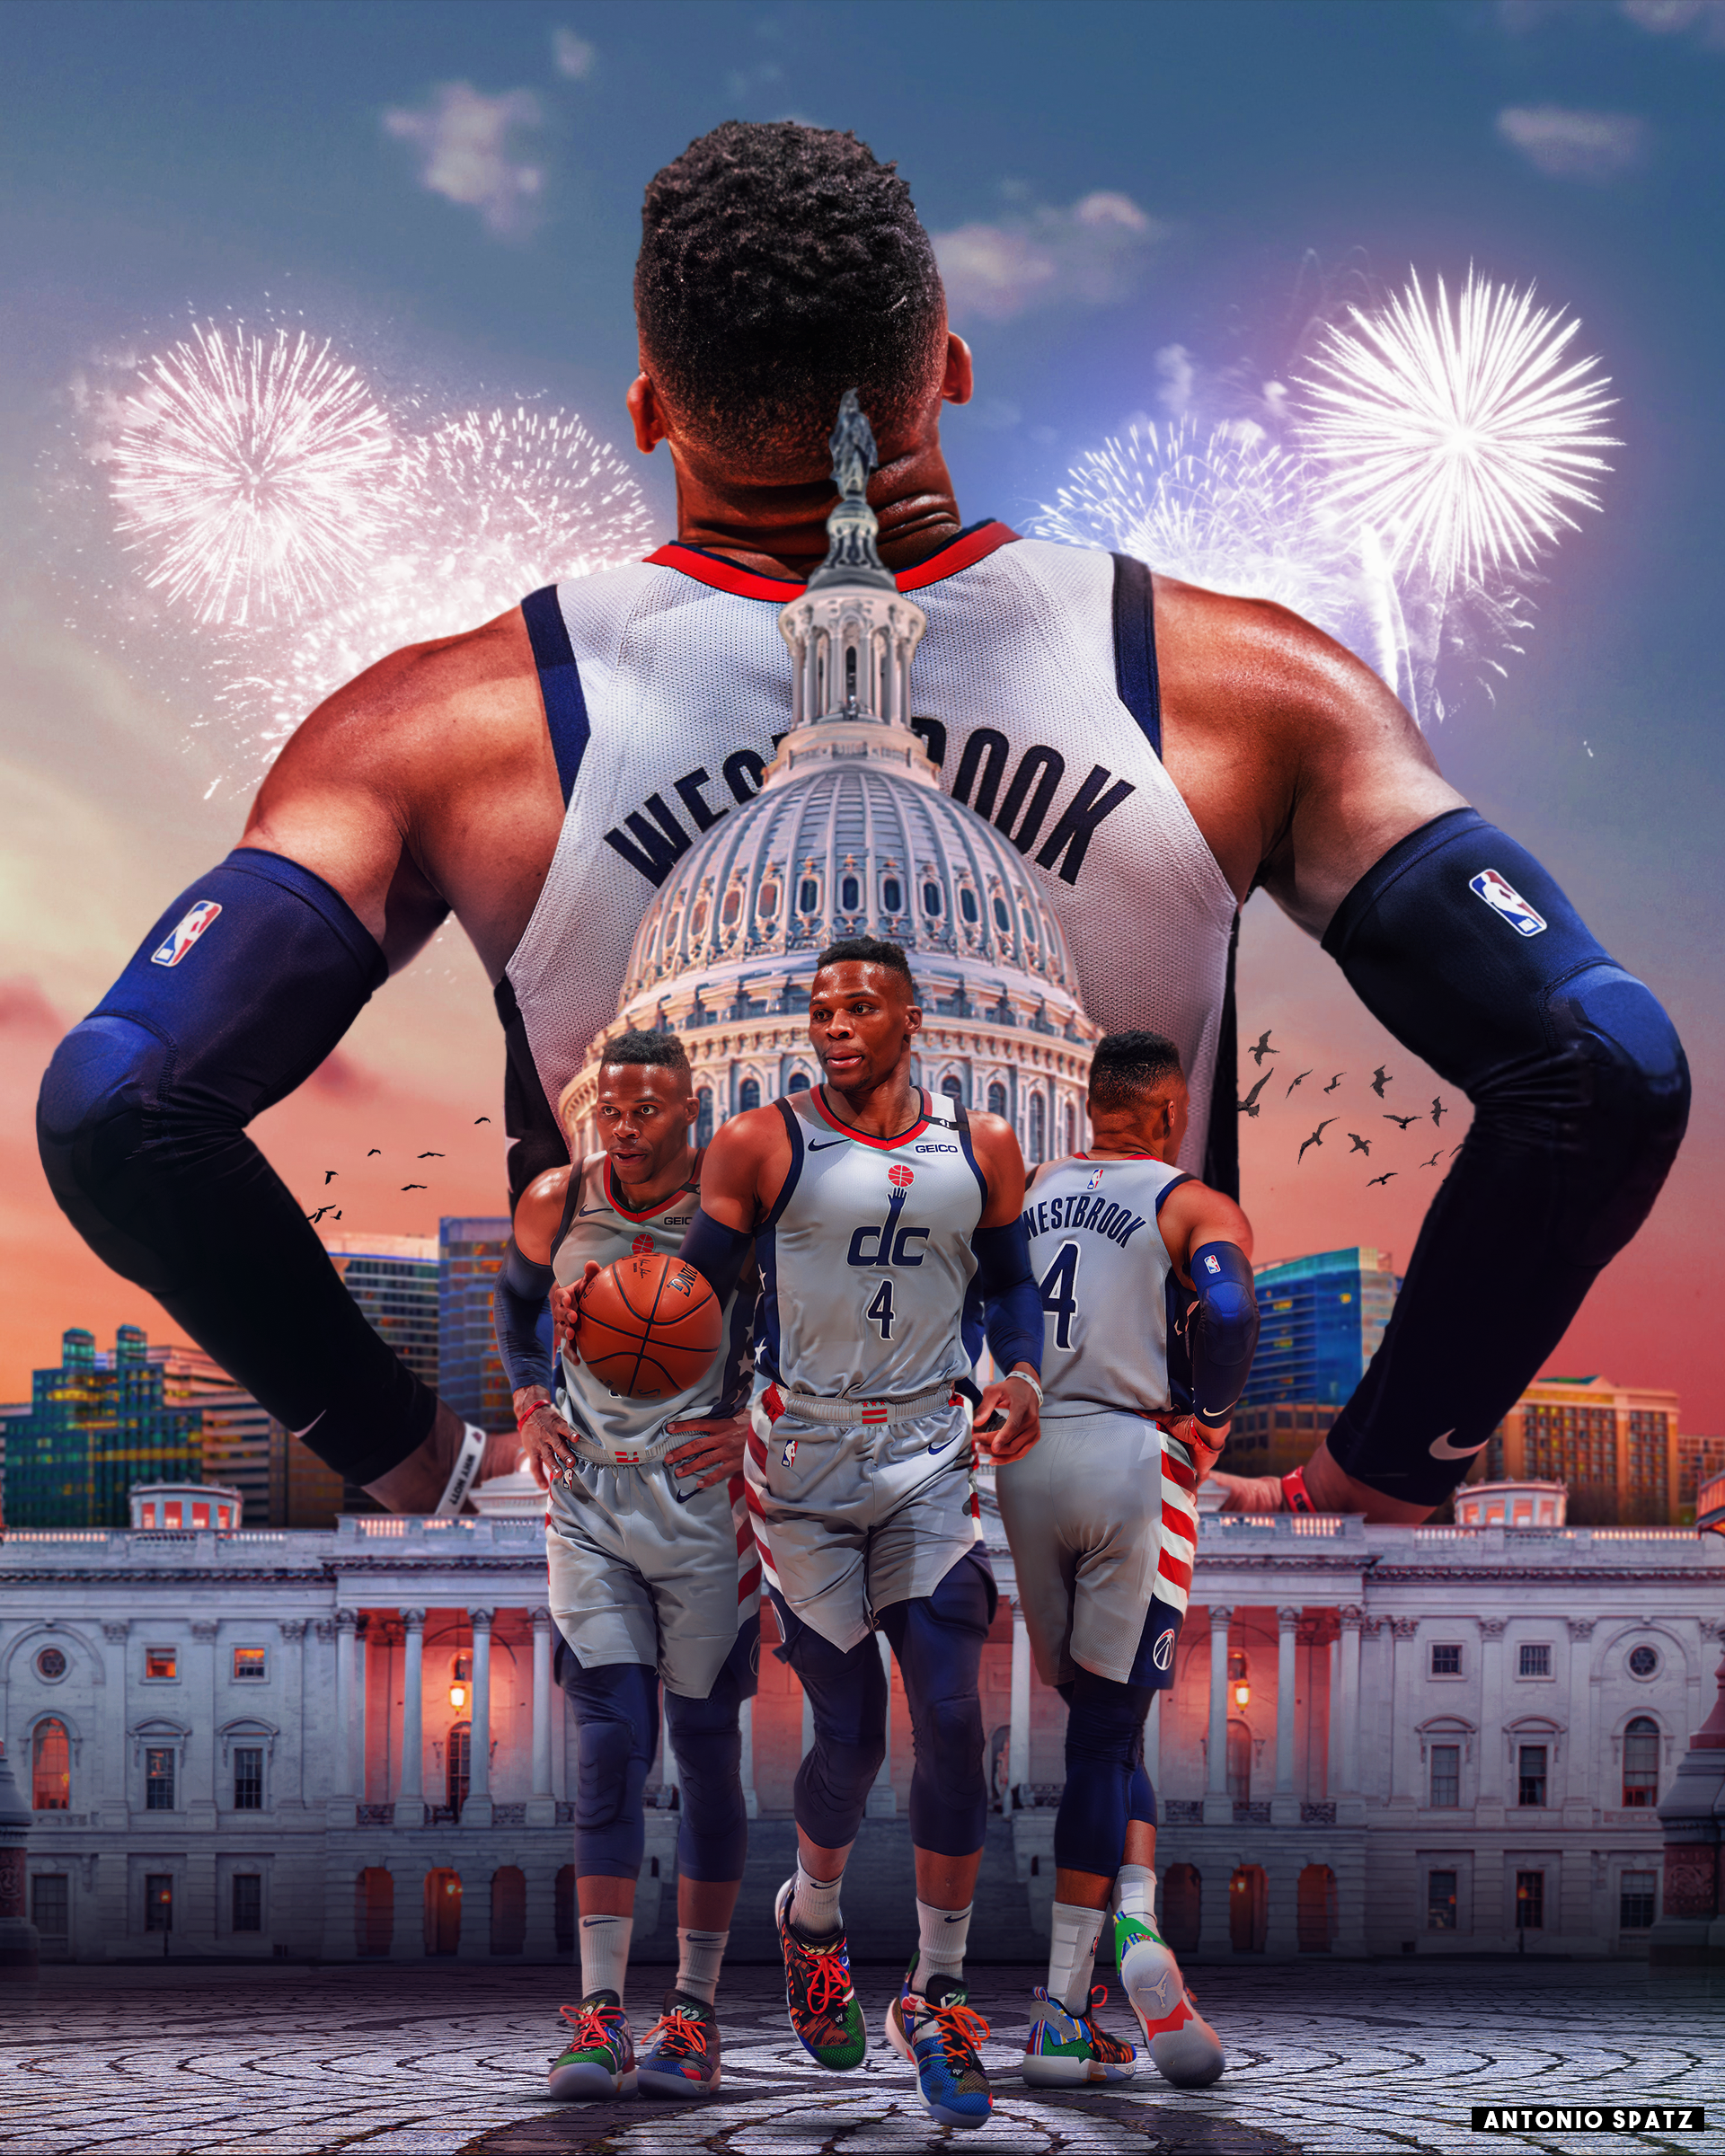 Russell Westbrook Retro NBA Wallpaper by skythlee on DeviantArt